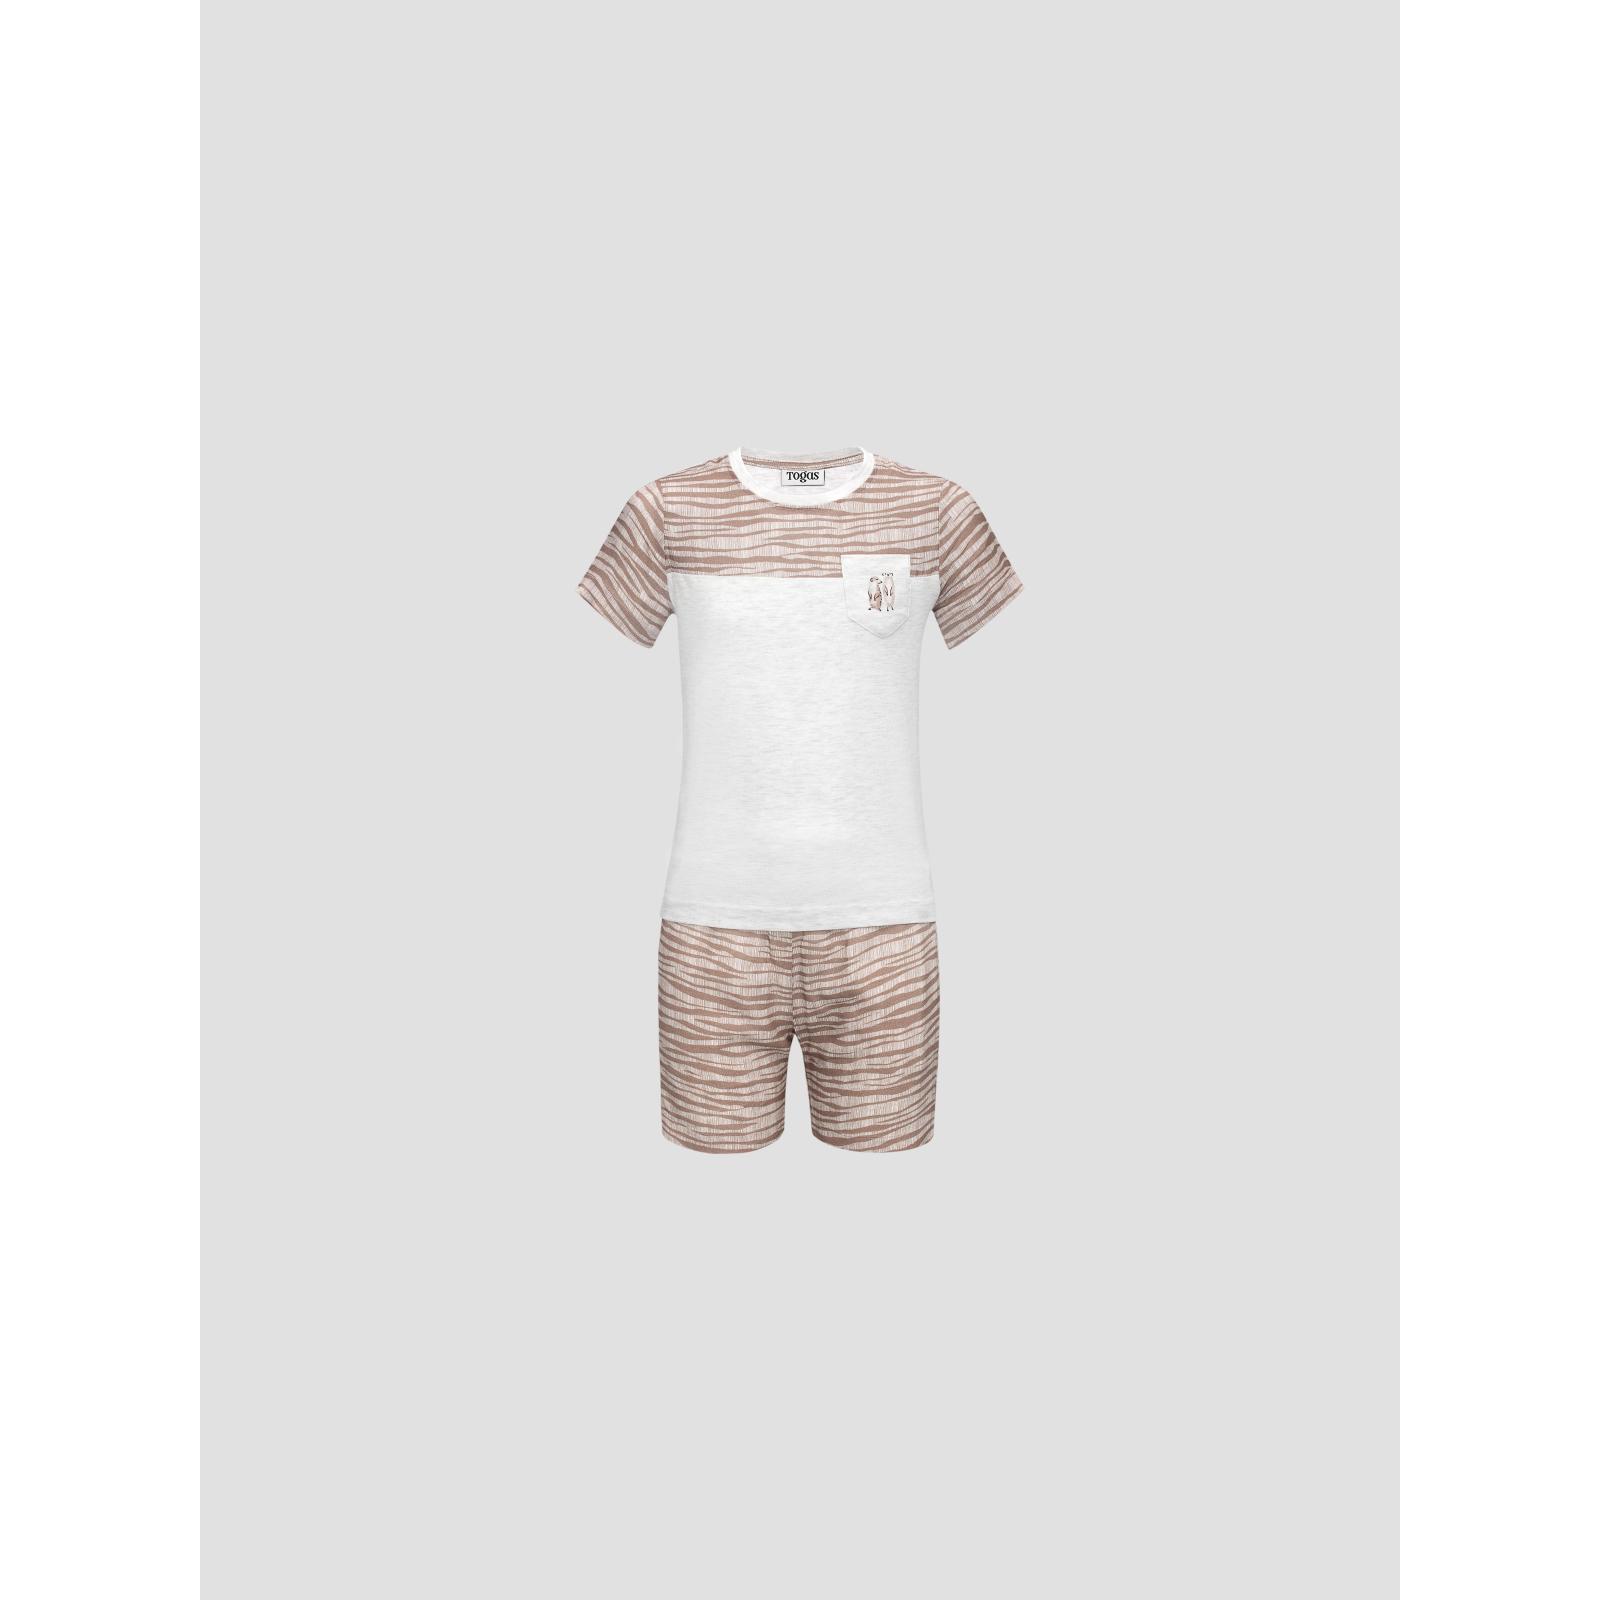 Пижама для мальчиков Kids by togas Сафари бежевый 104-110 см пижама сорочка шорты